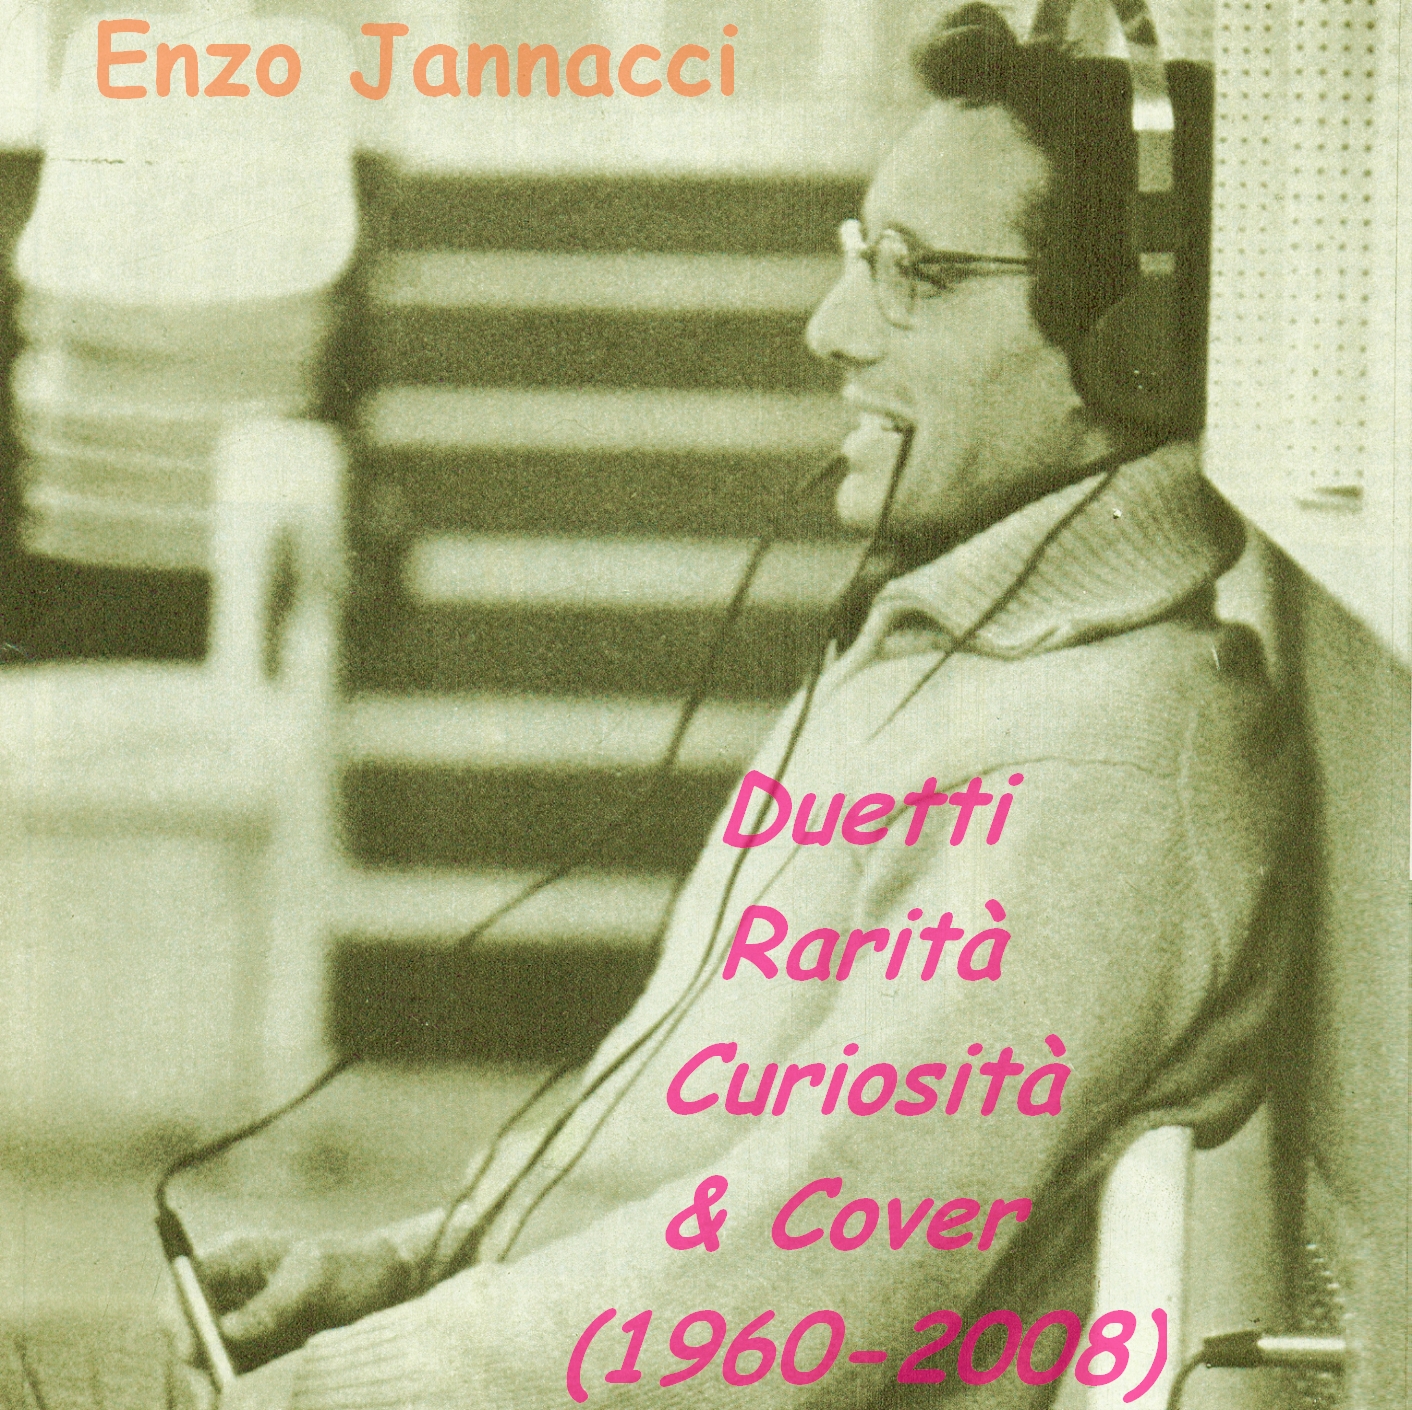 Discografia Completa Francesco Baccini